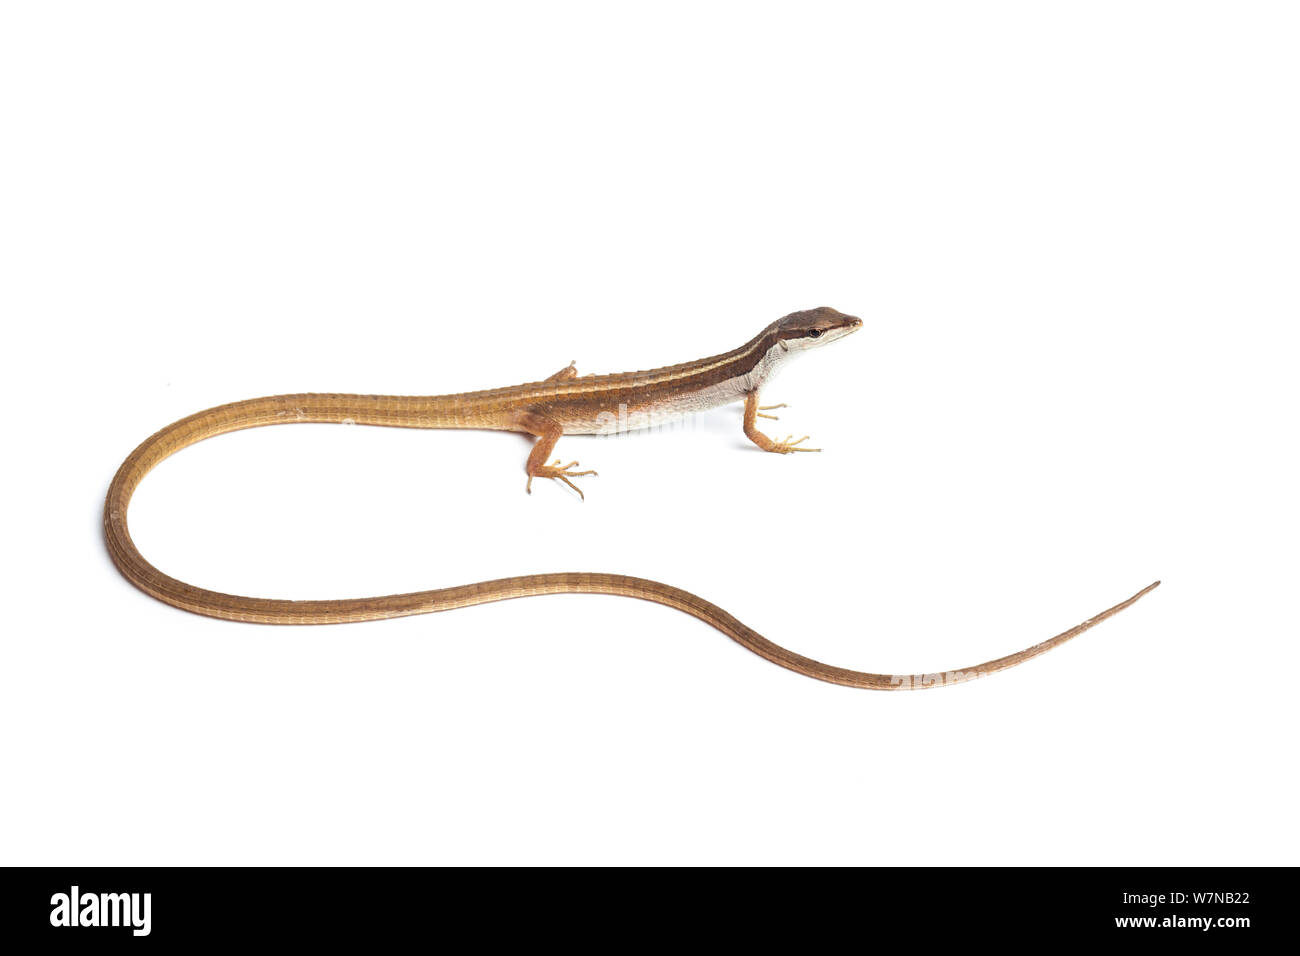 Six-lined long-tailed lizard (Takydromus sexlineatus), captive, occurs South East Asia Stock Photo